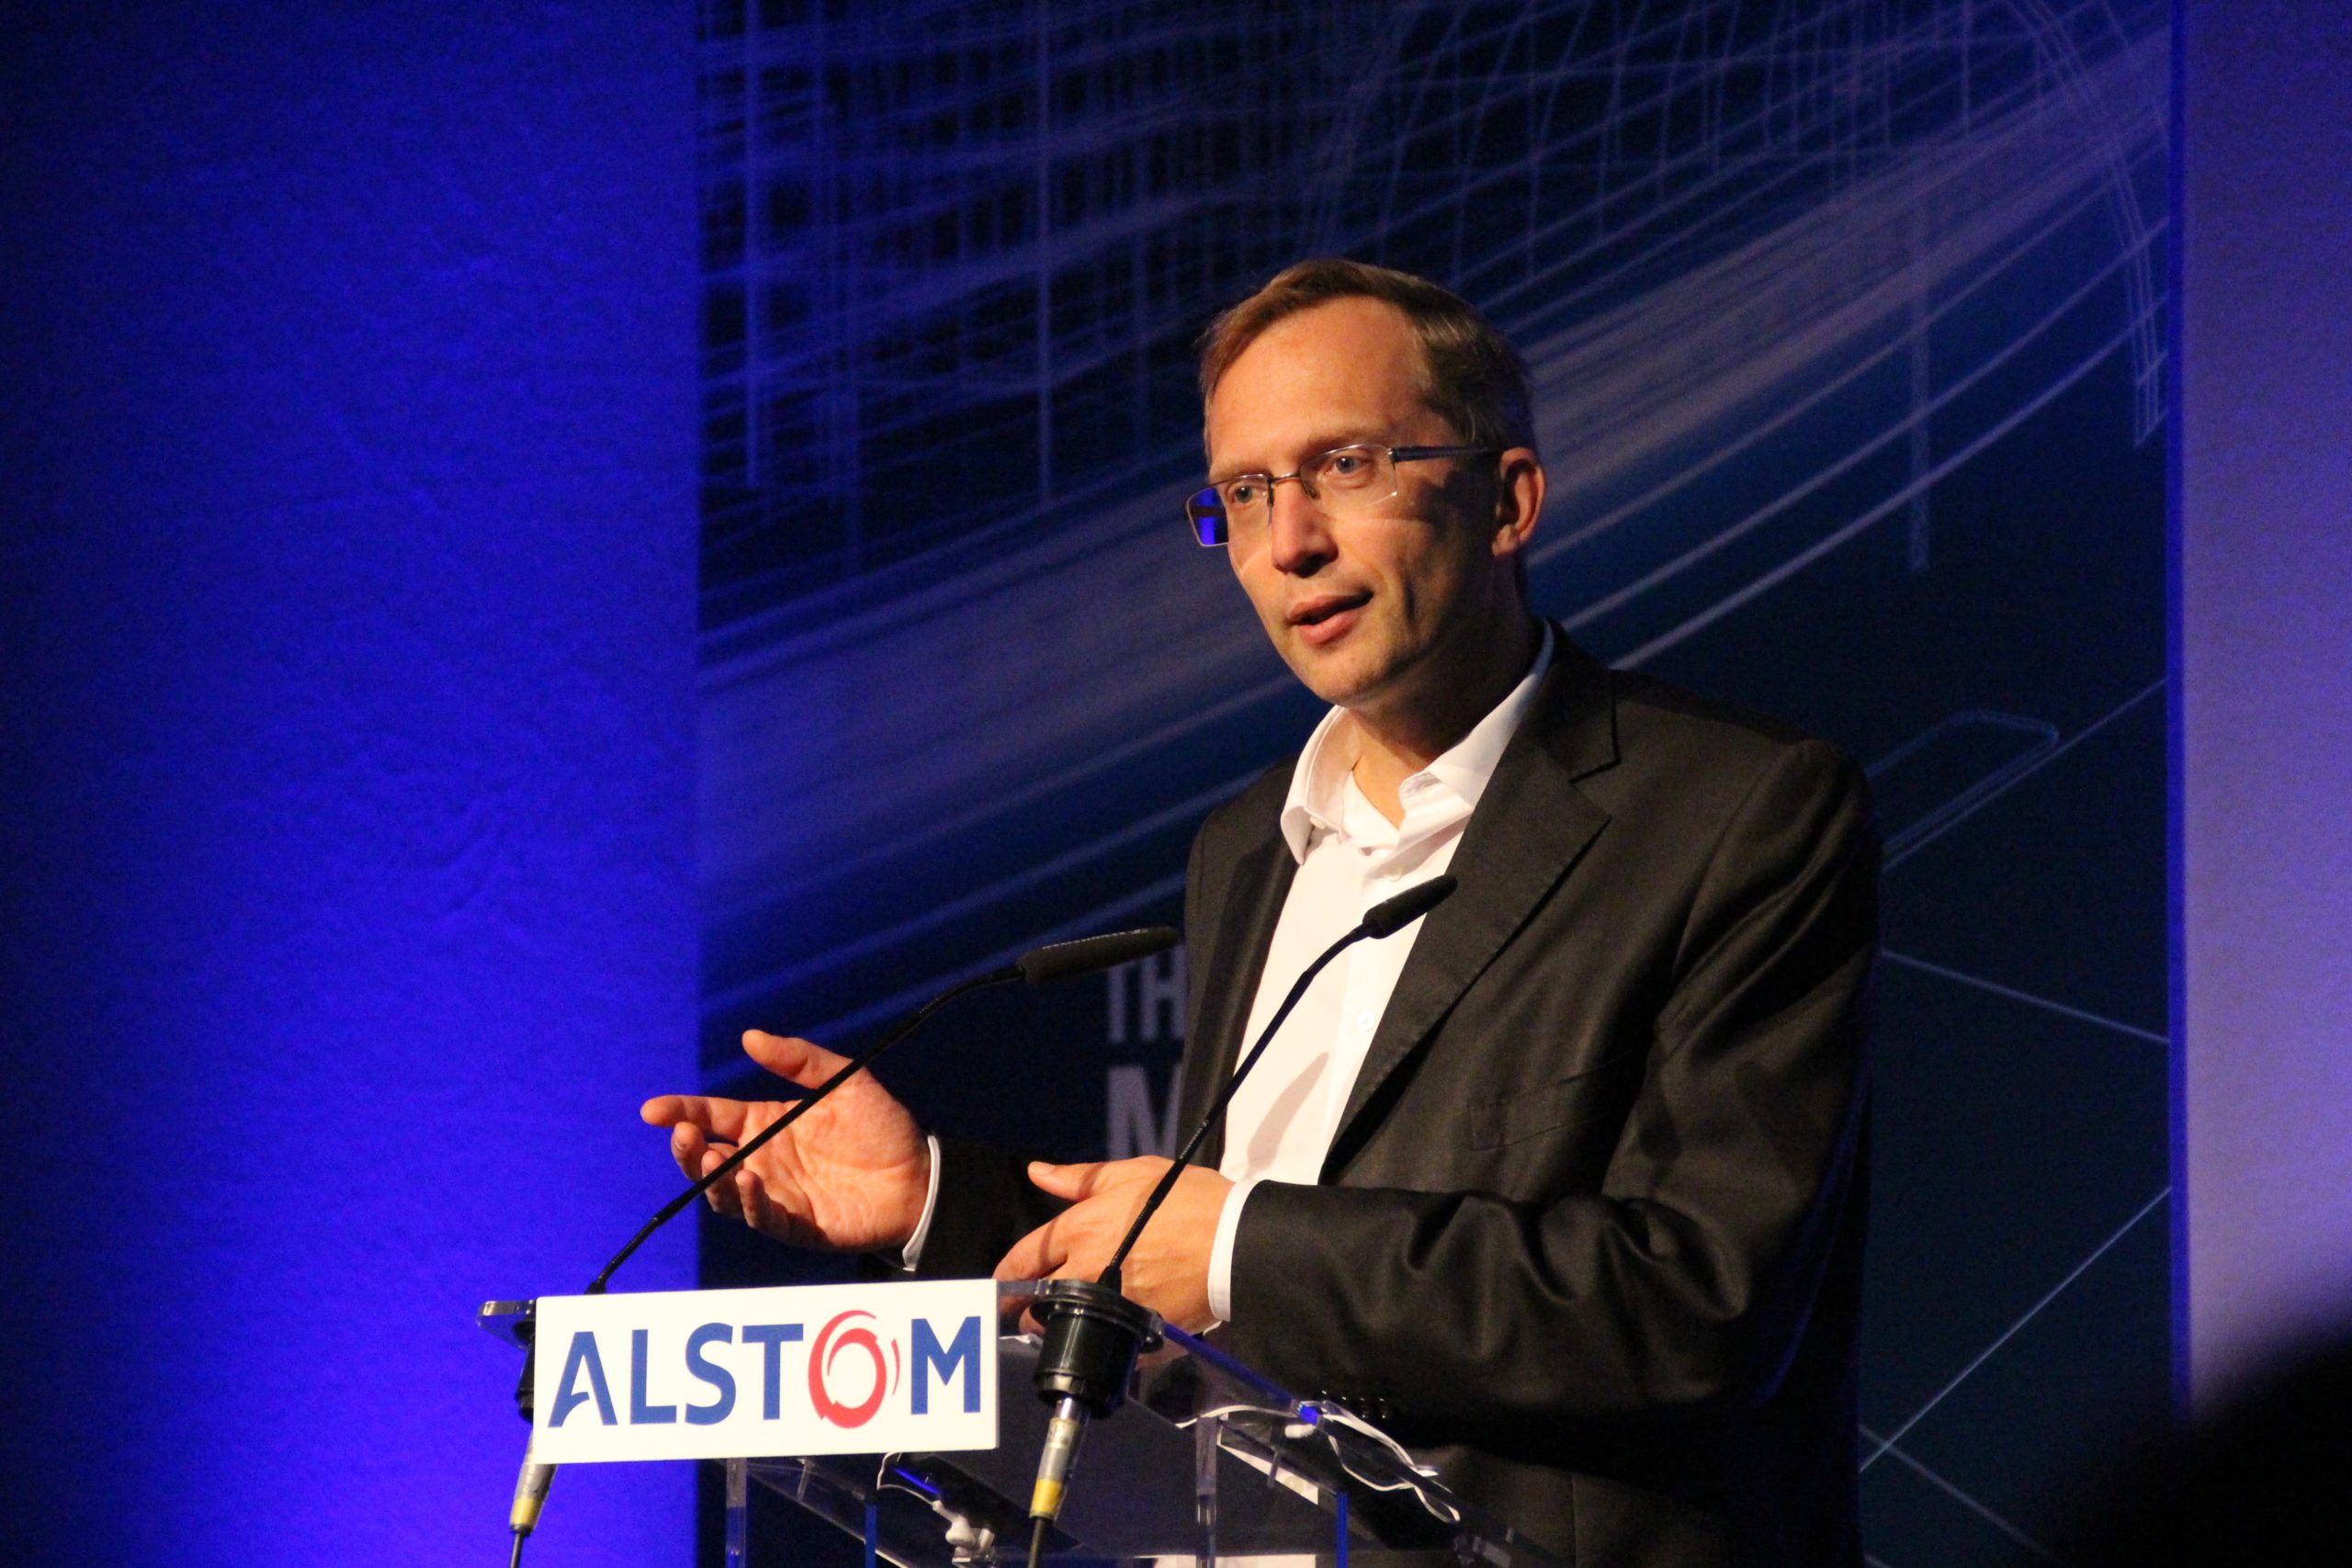 Man at podium with Alstom logo